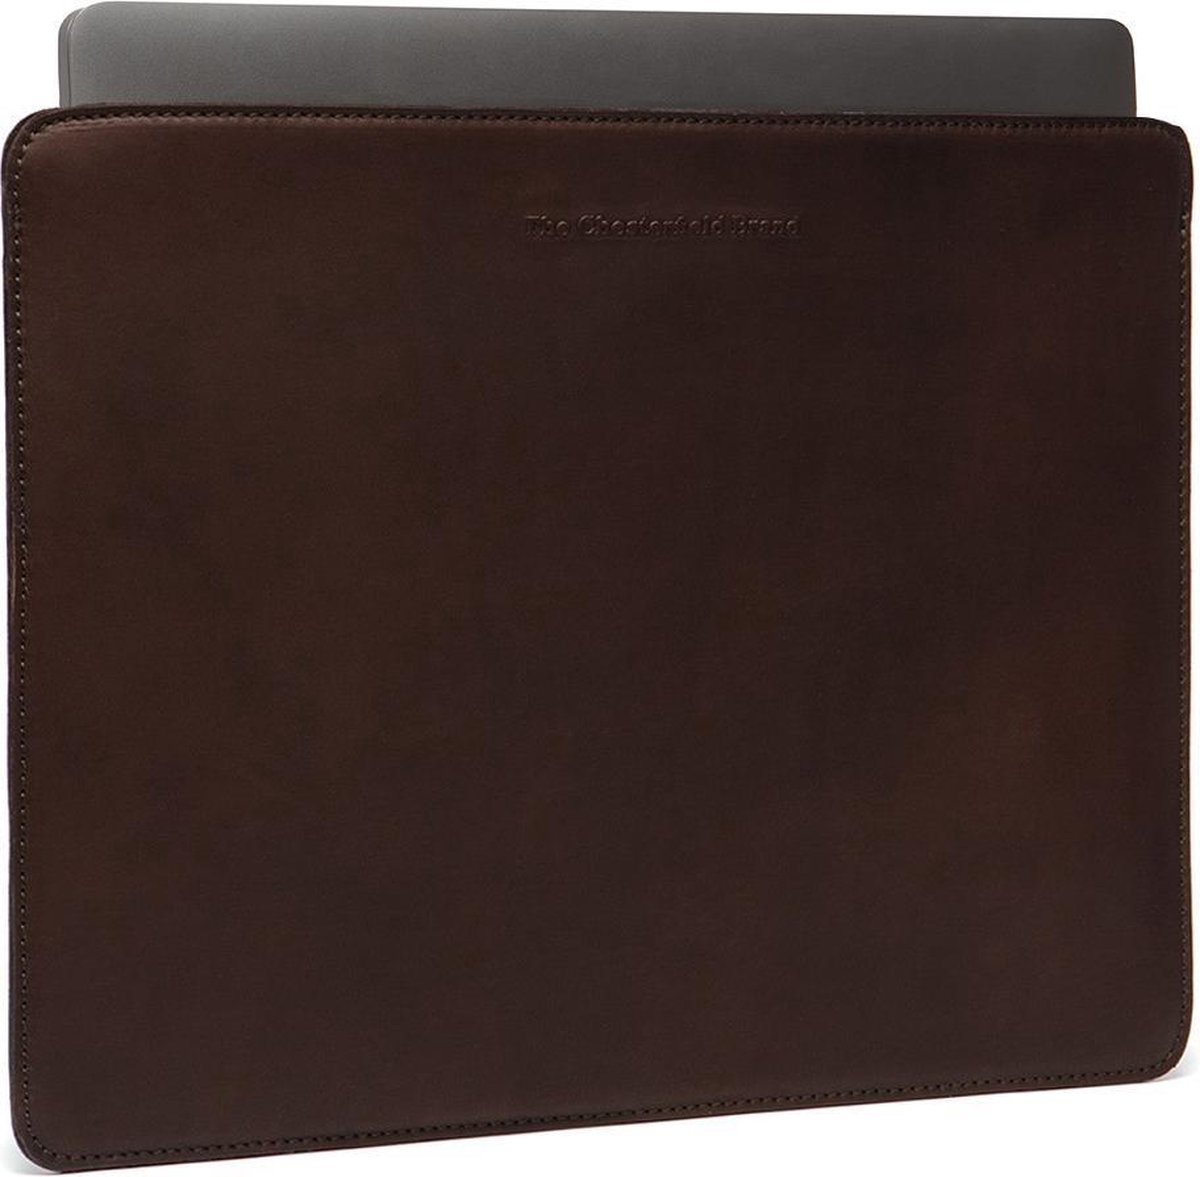 The Chesterfield Brand Leren Laptop Sleeve Bruin Marbella 13 Inch